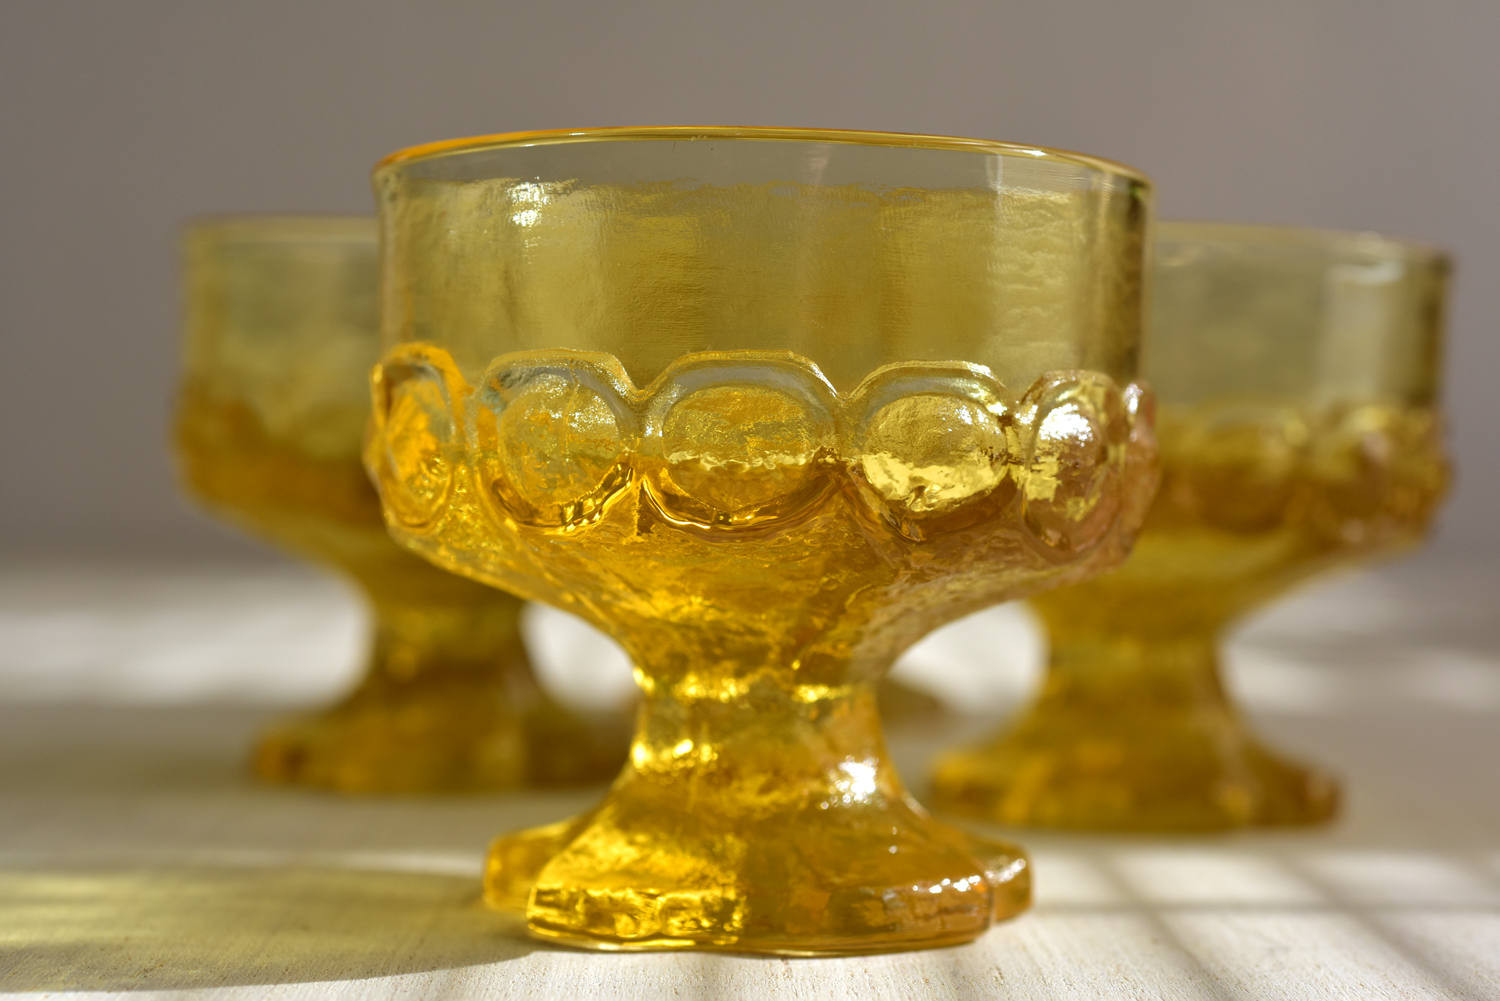 12 Stunning Antique Amber Glass Vase 2022 free download antique amber glass vase of vintageyellow cornsilk dessert bowl dish tiffin etsy intended for dc29fc294c28ezoom